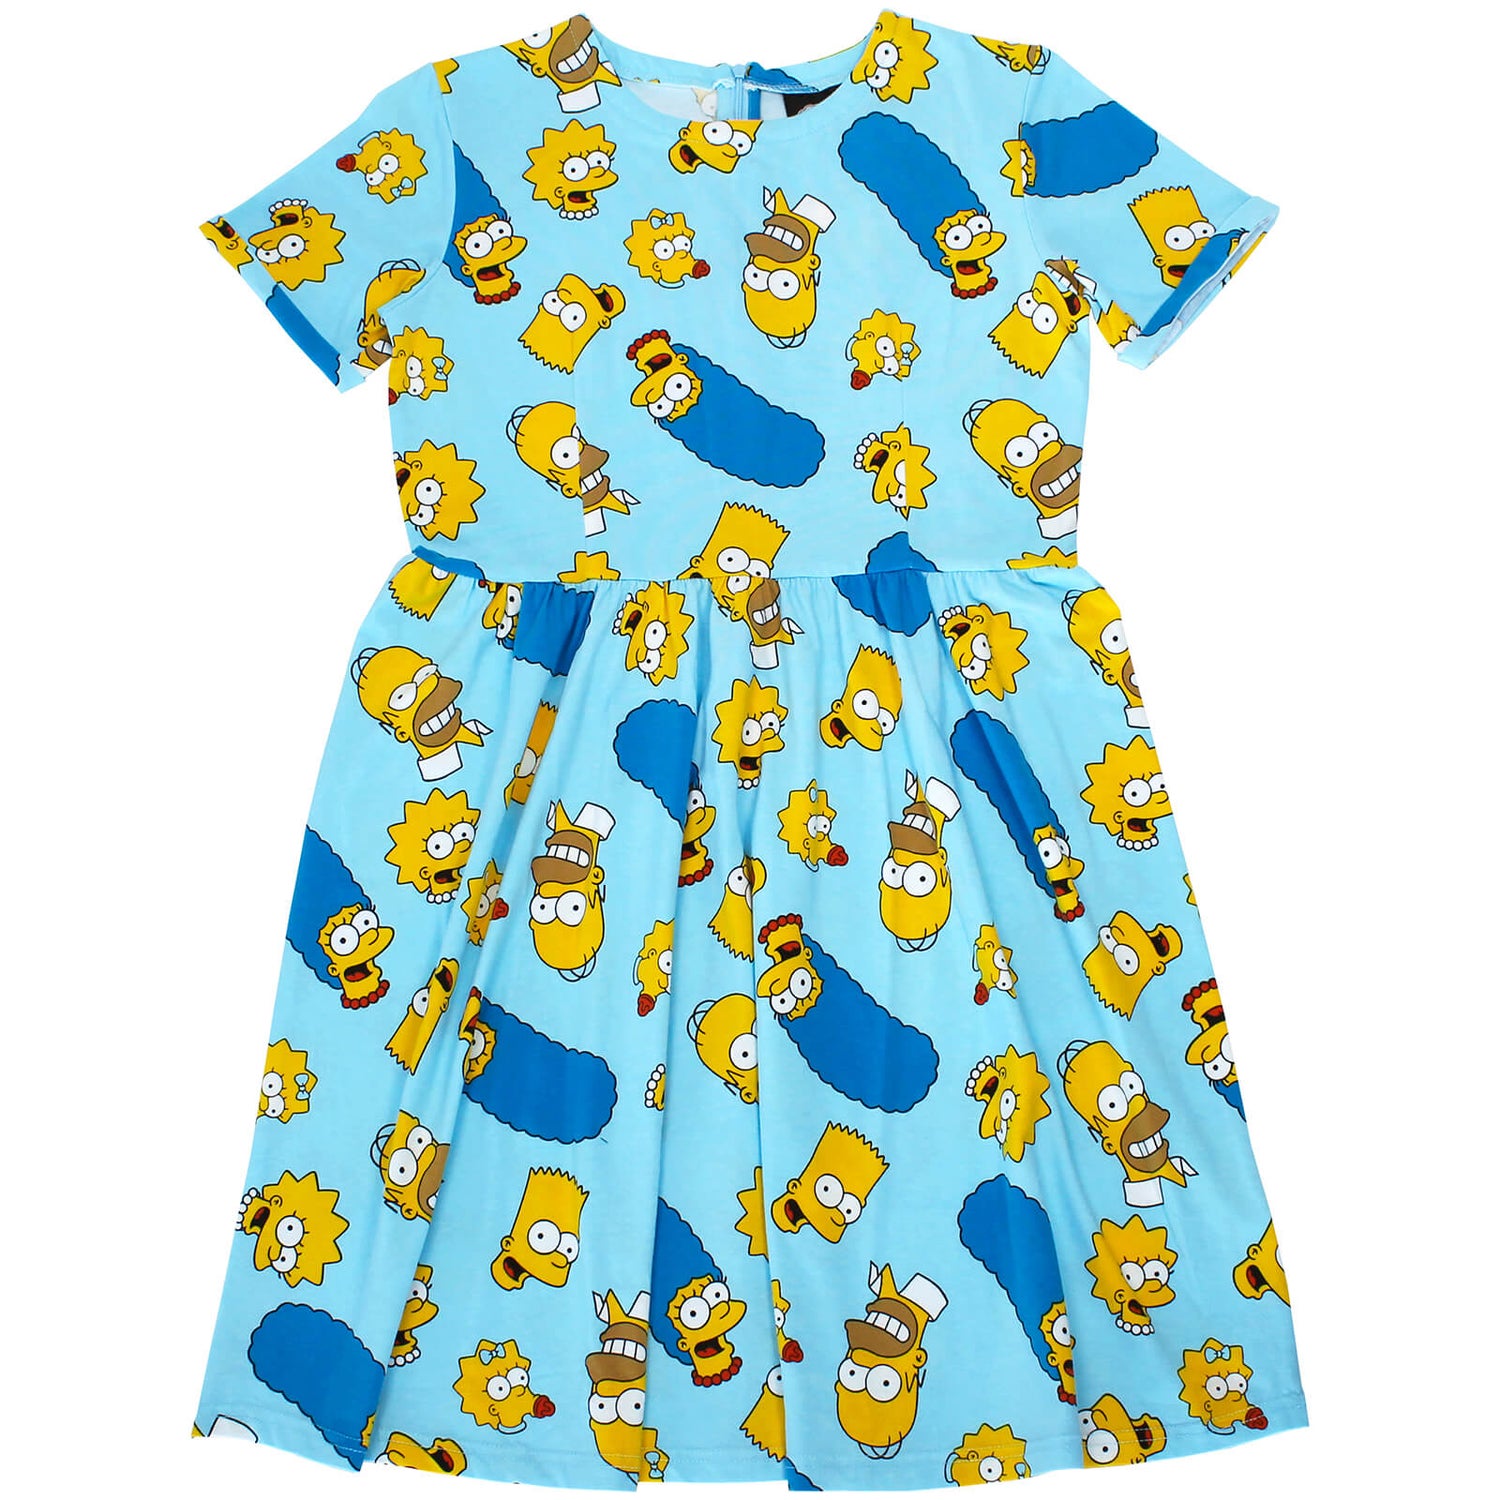 Cakeworthy x The Simpsons - Simpsons Family Toss Print Dress